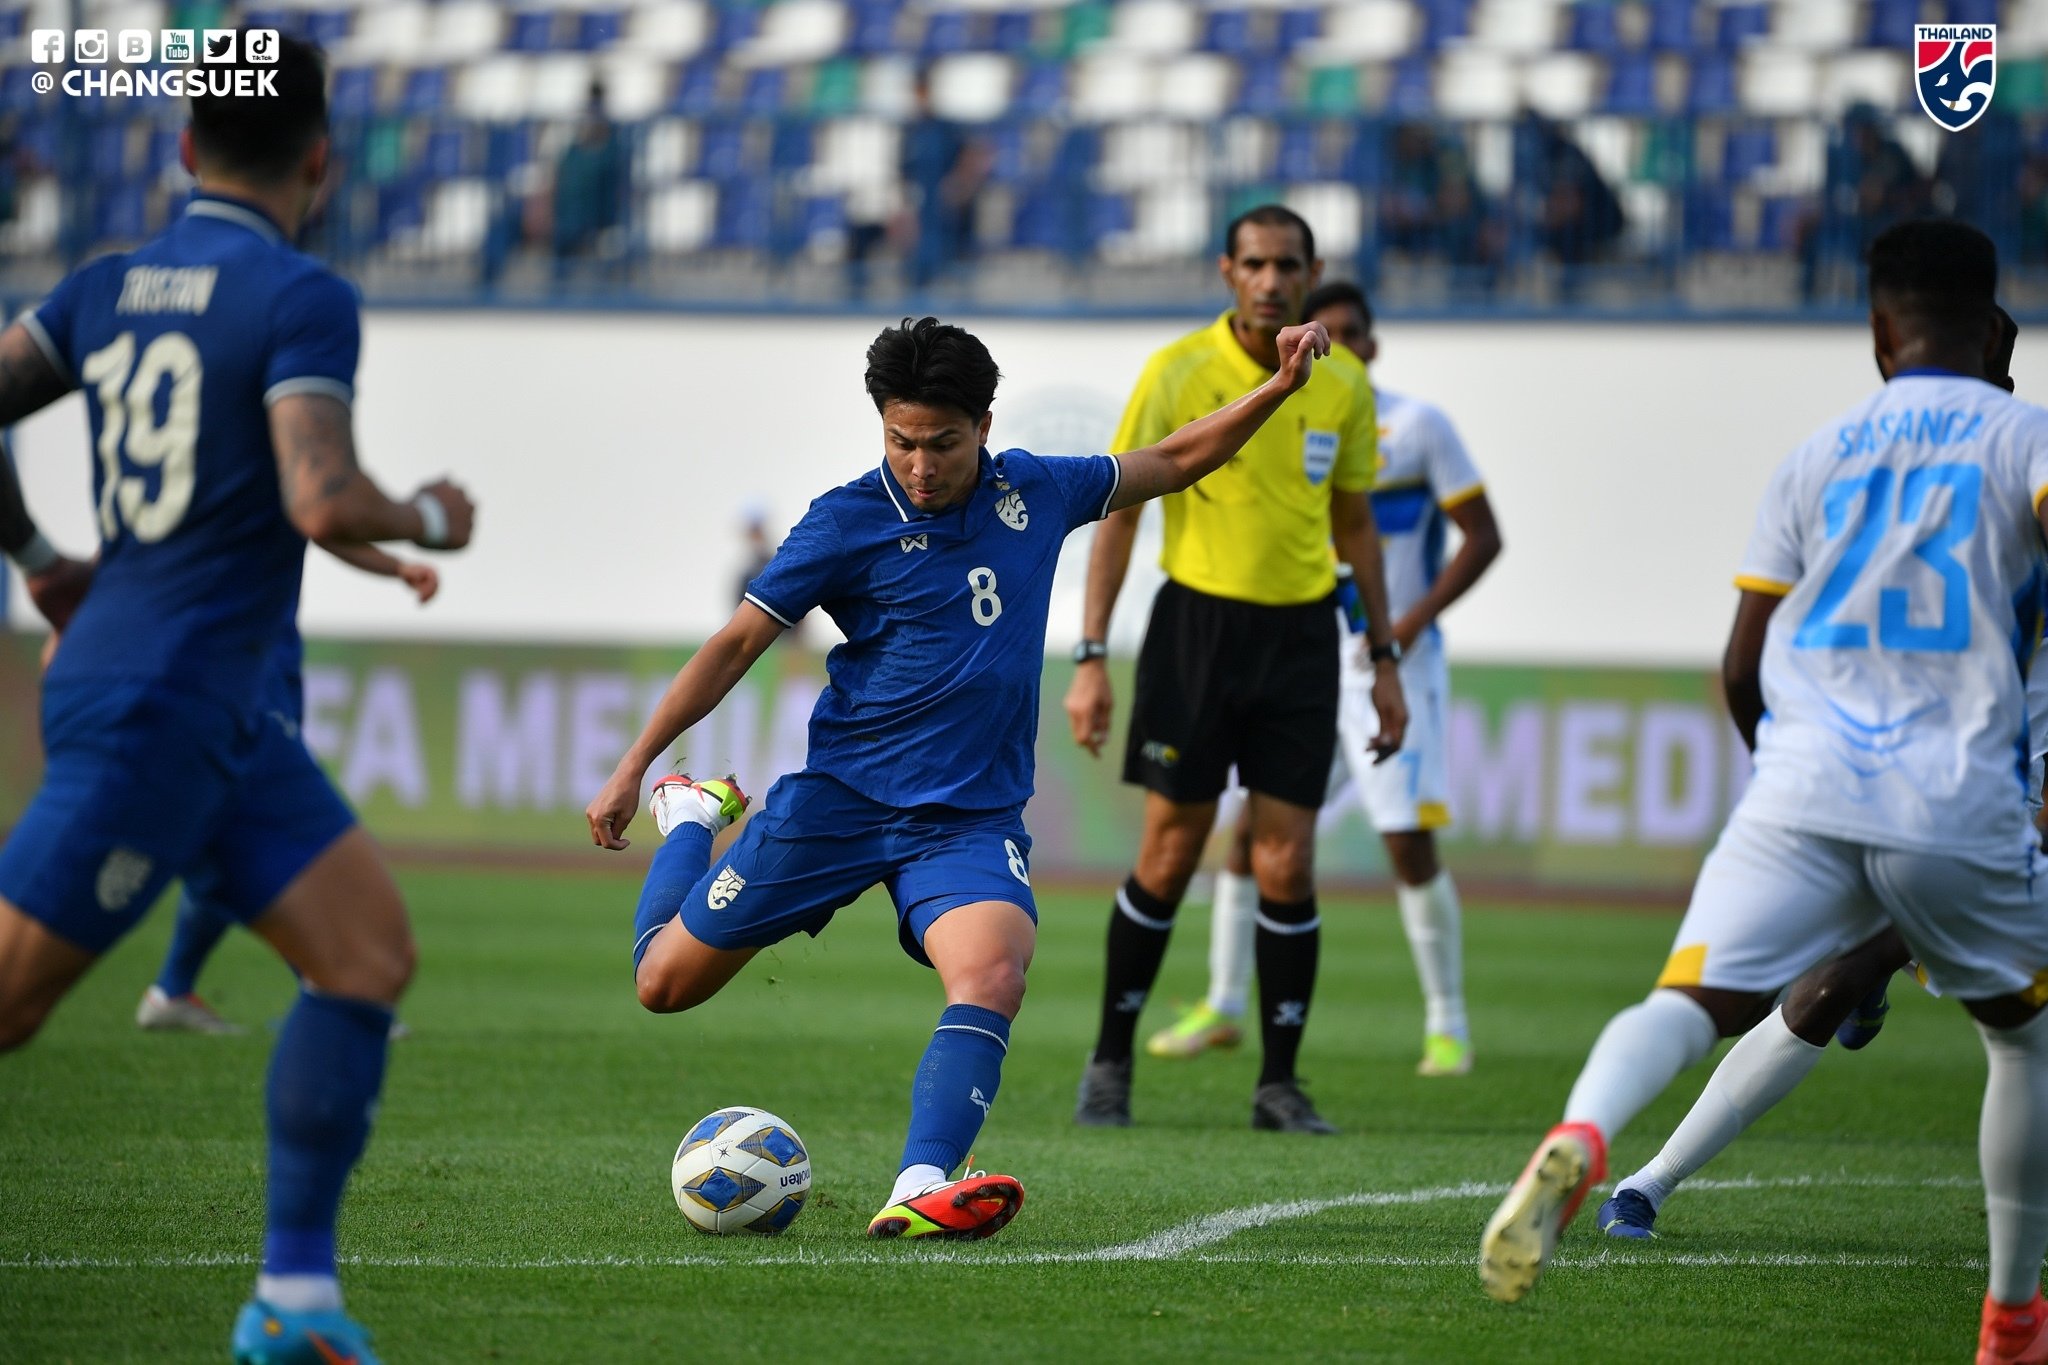 Kualifikasi Piala Asia 2023: Thailand Hampir Lolos, Singapura Masuk Kotak